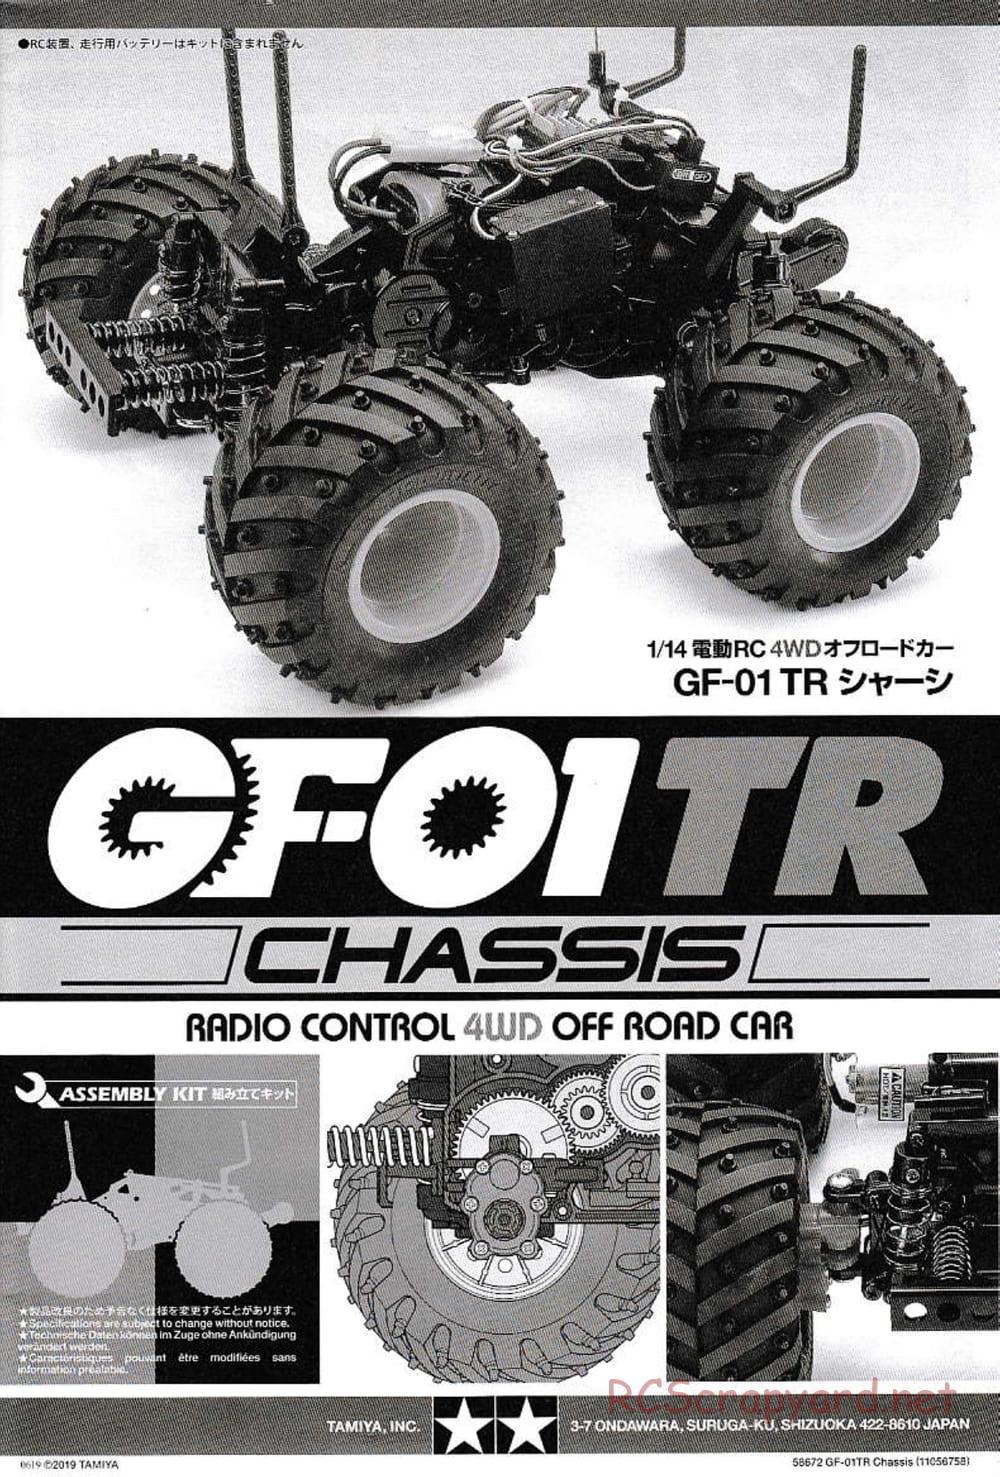 Tamiya - Monster Beetle Trail - GF-01TR Chassis - Manual - Page 1